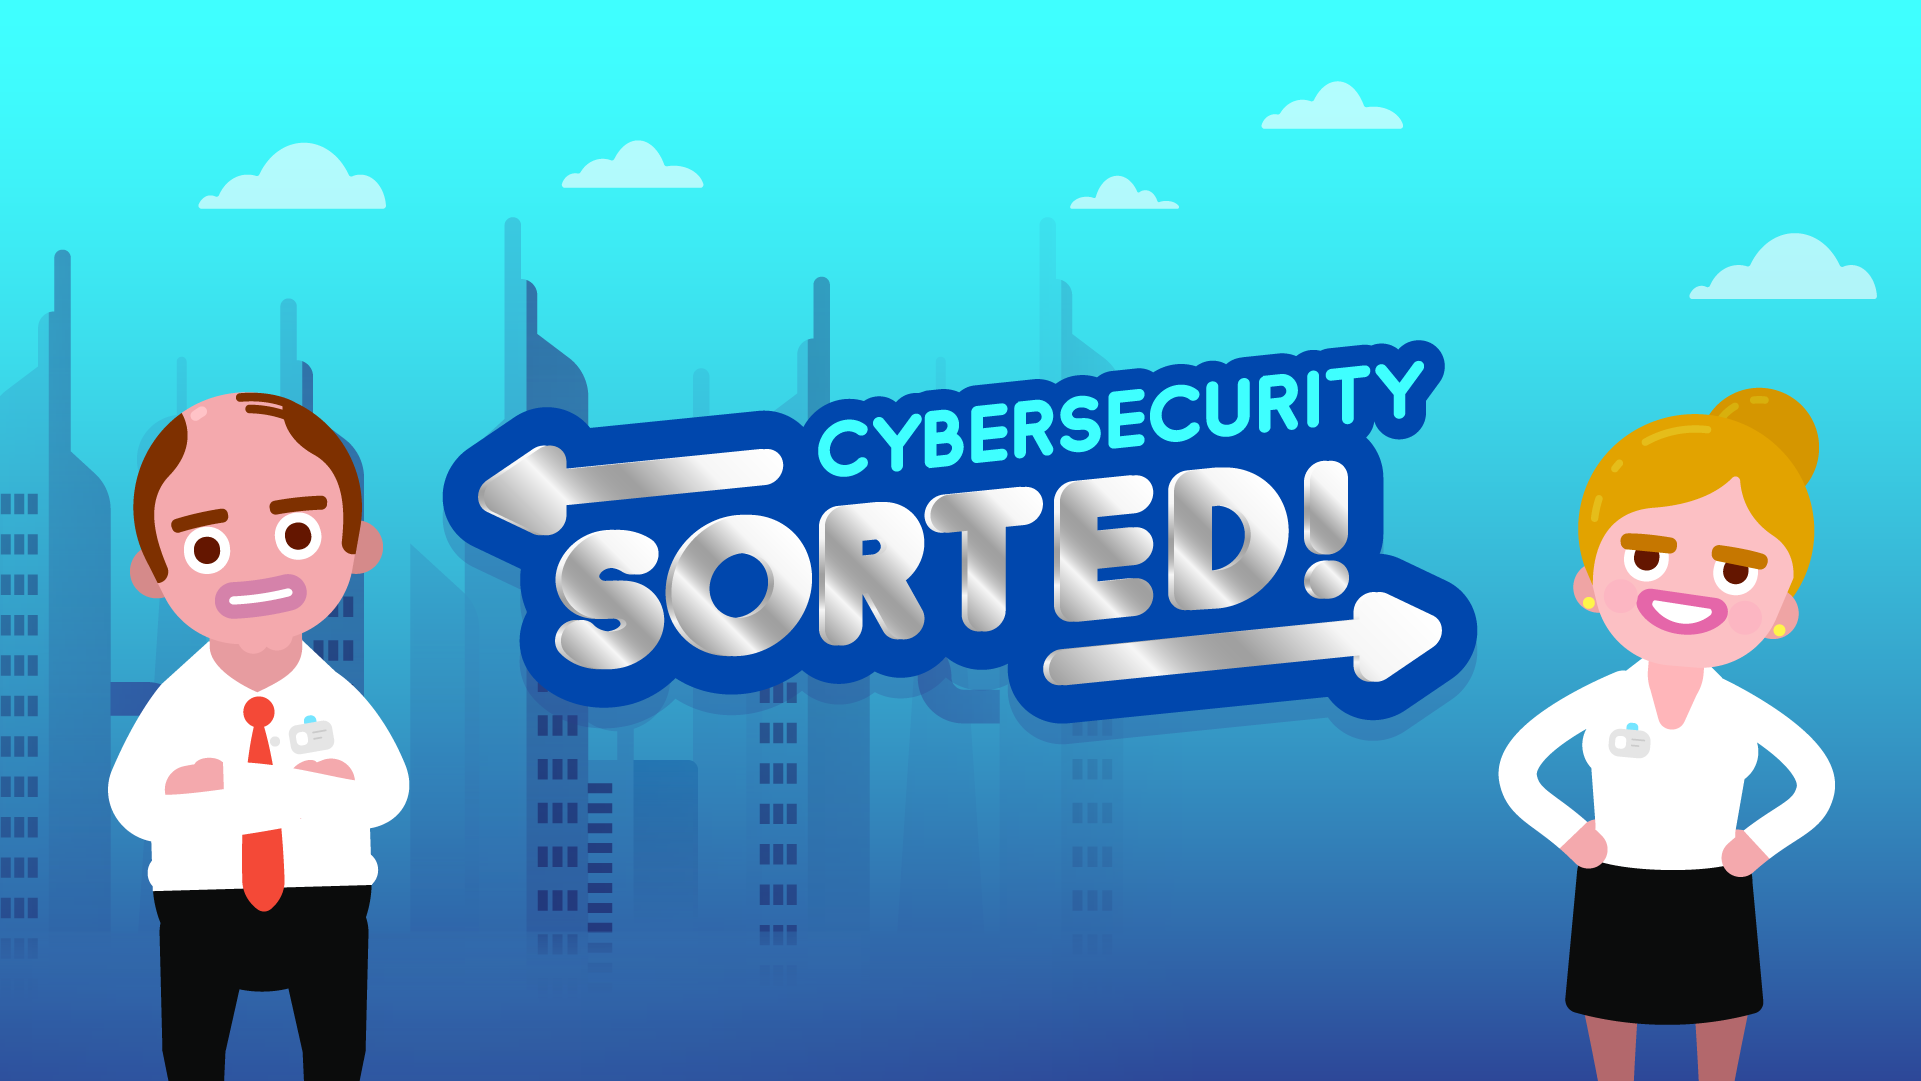 Cybersecurity Sorted